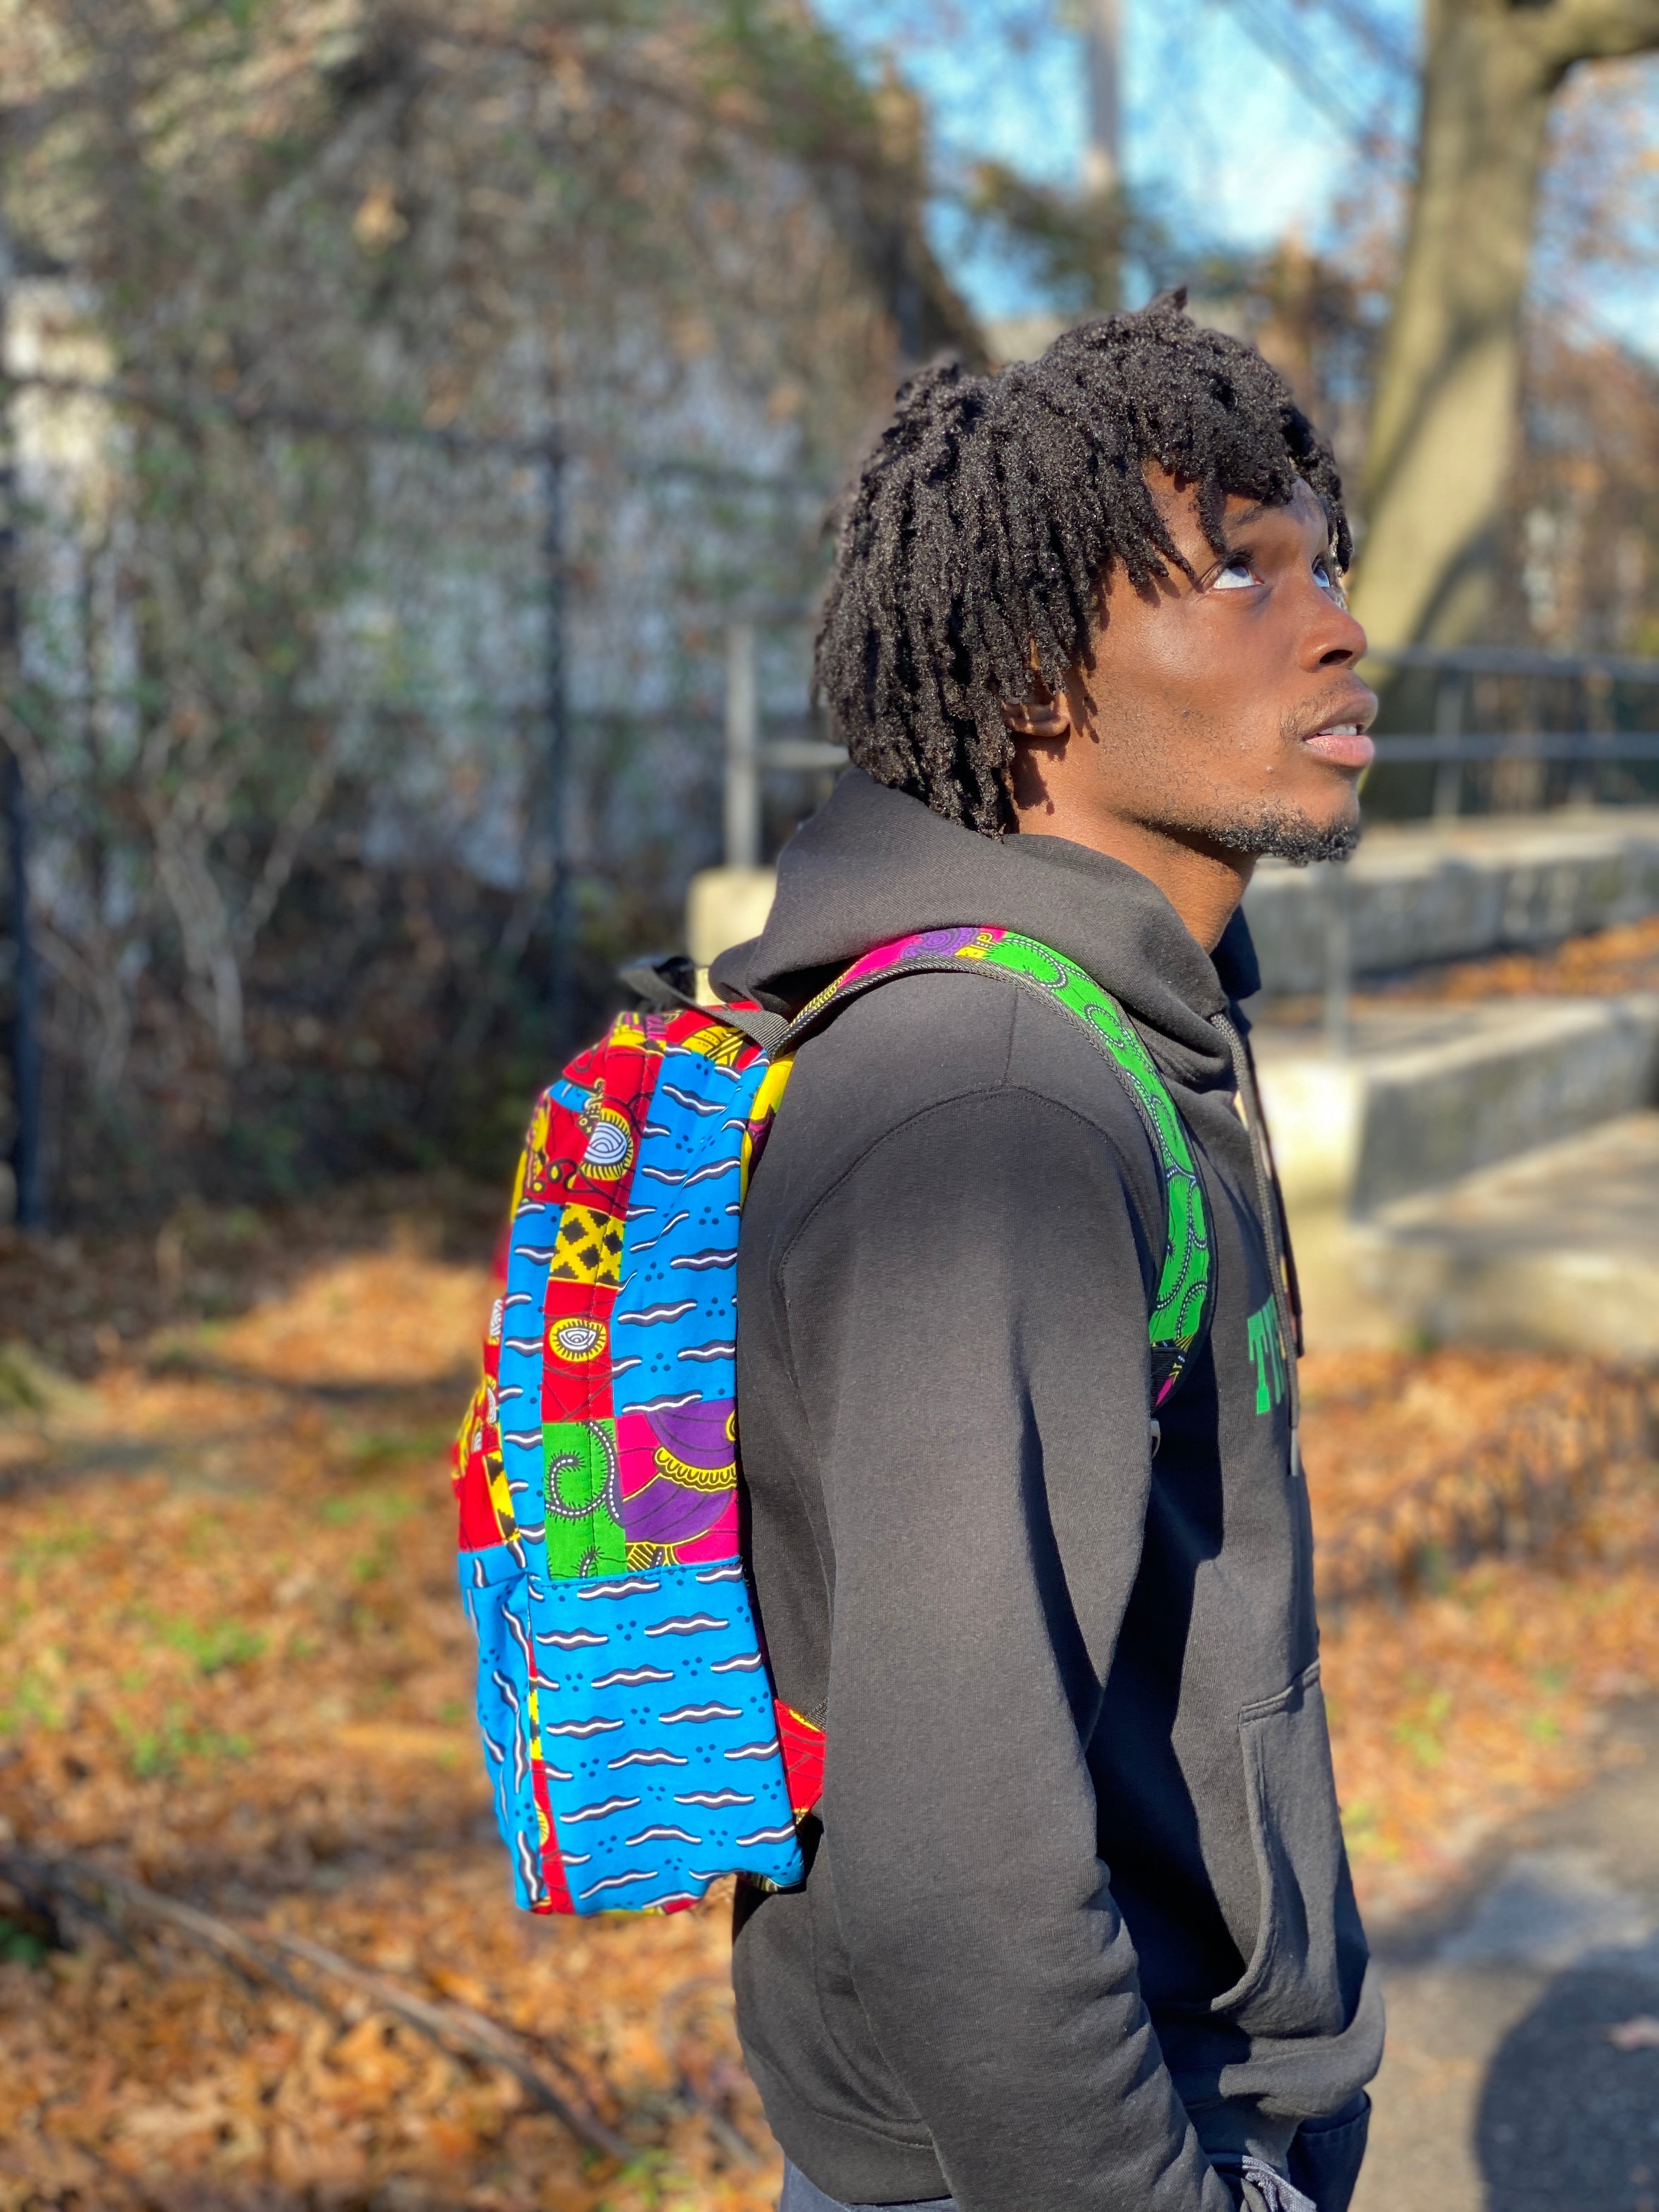 Blue Funky Backpack, African Print Backpack, African Bags